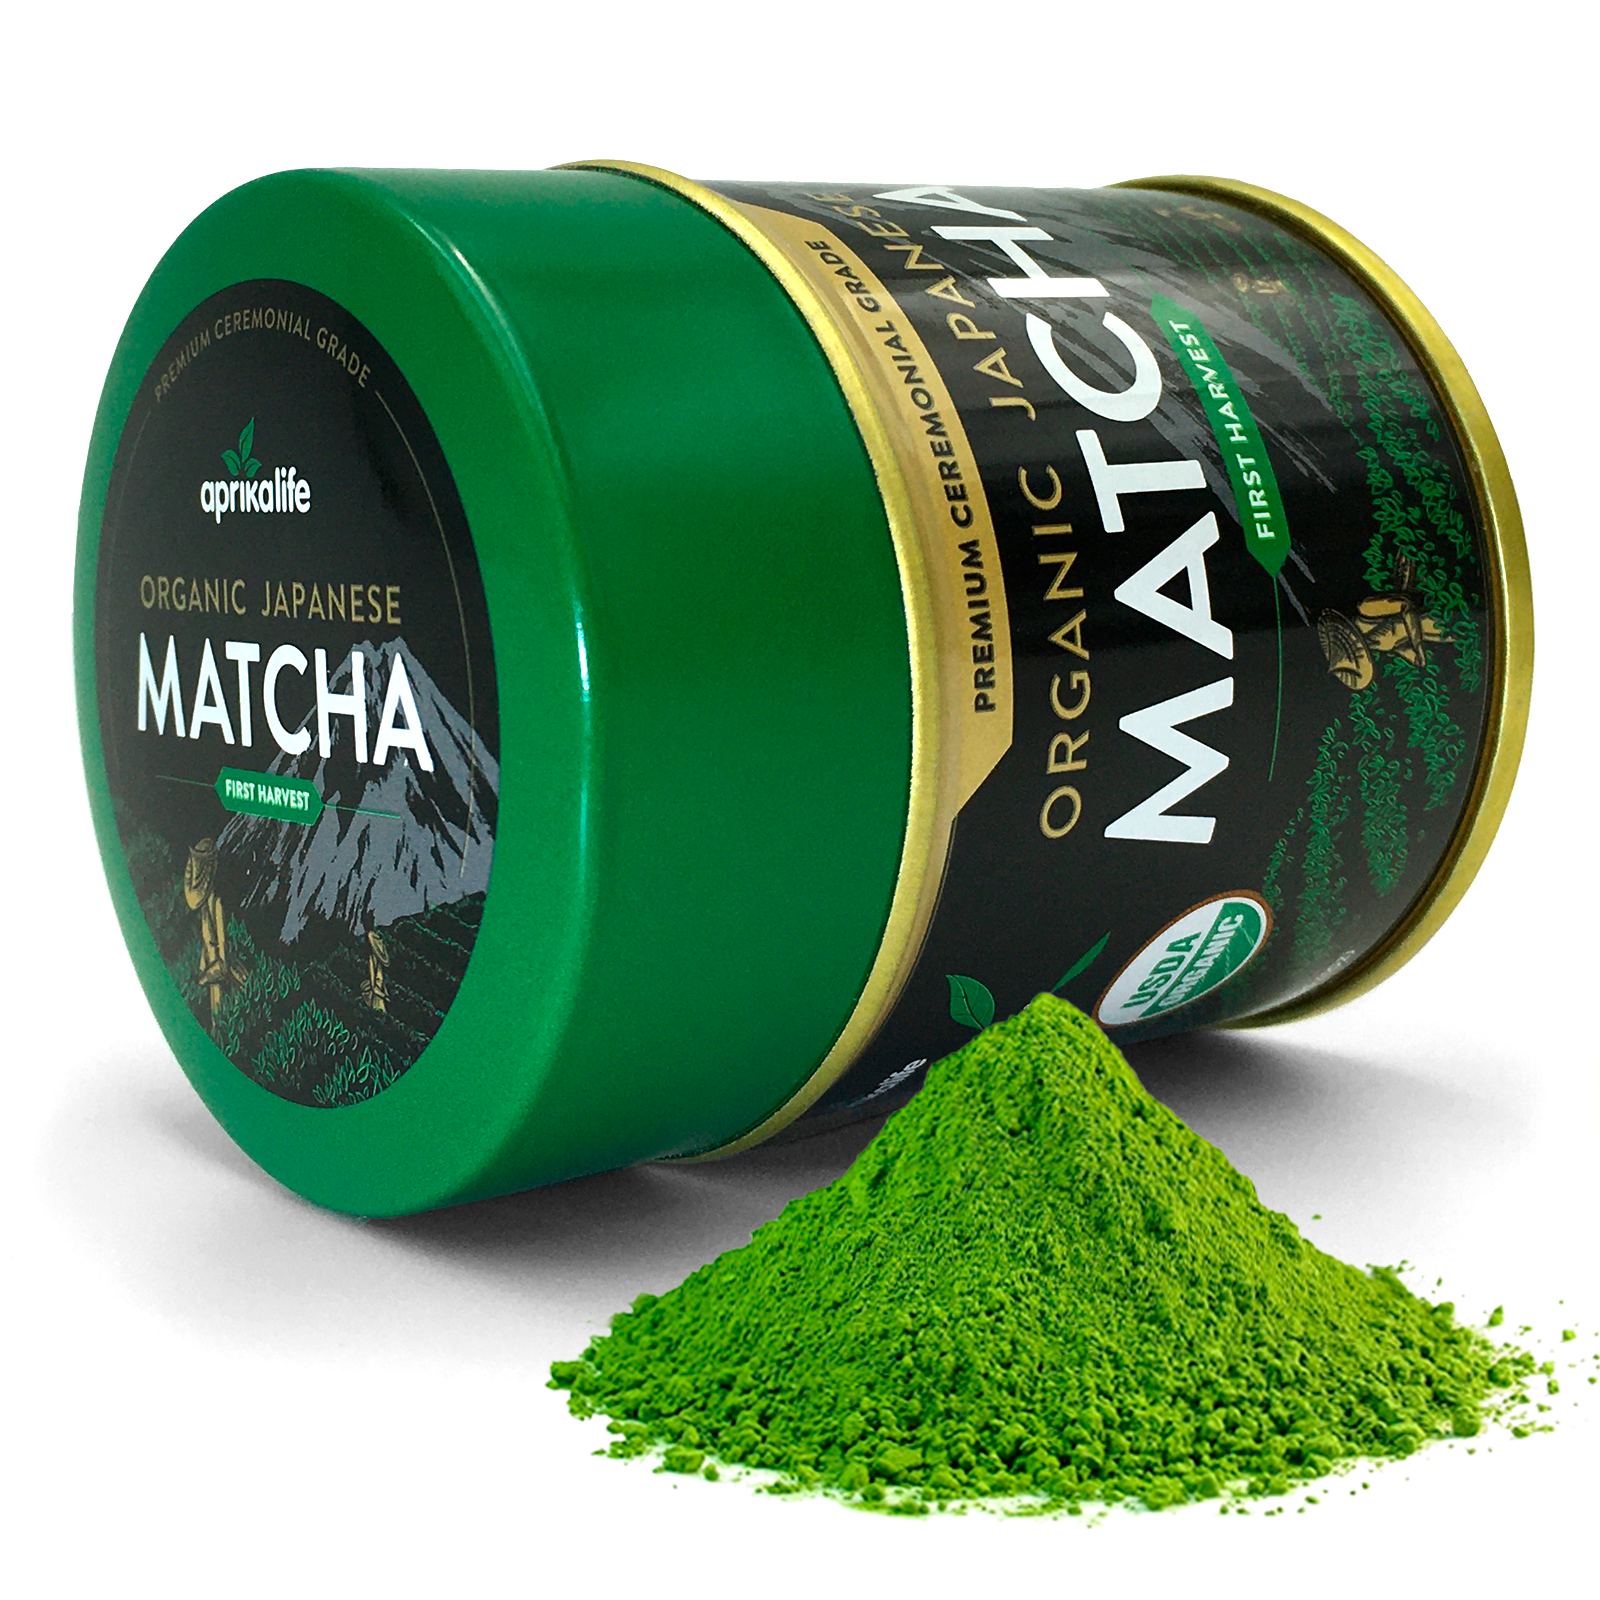 Buy Unfurl Matcha Tea Gift Set Online– aprikamatcha – Aprika Life